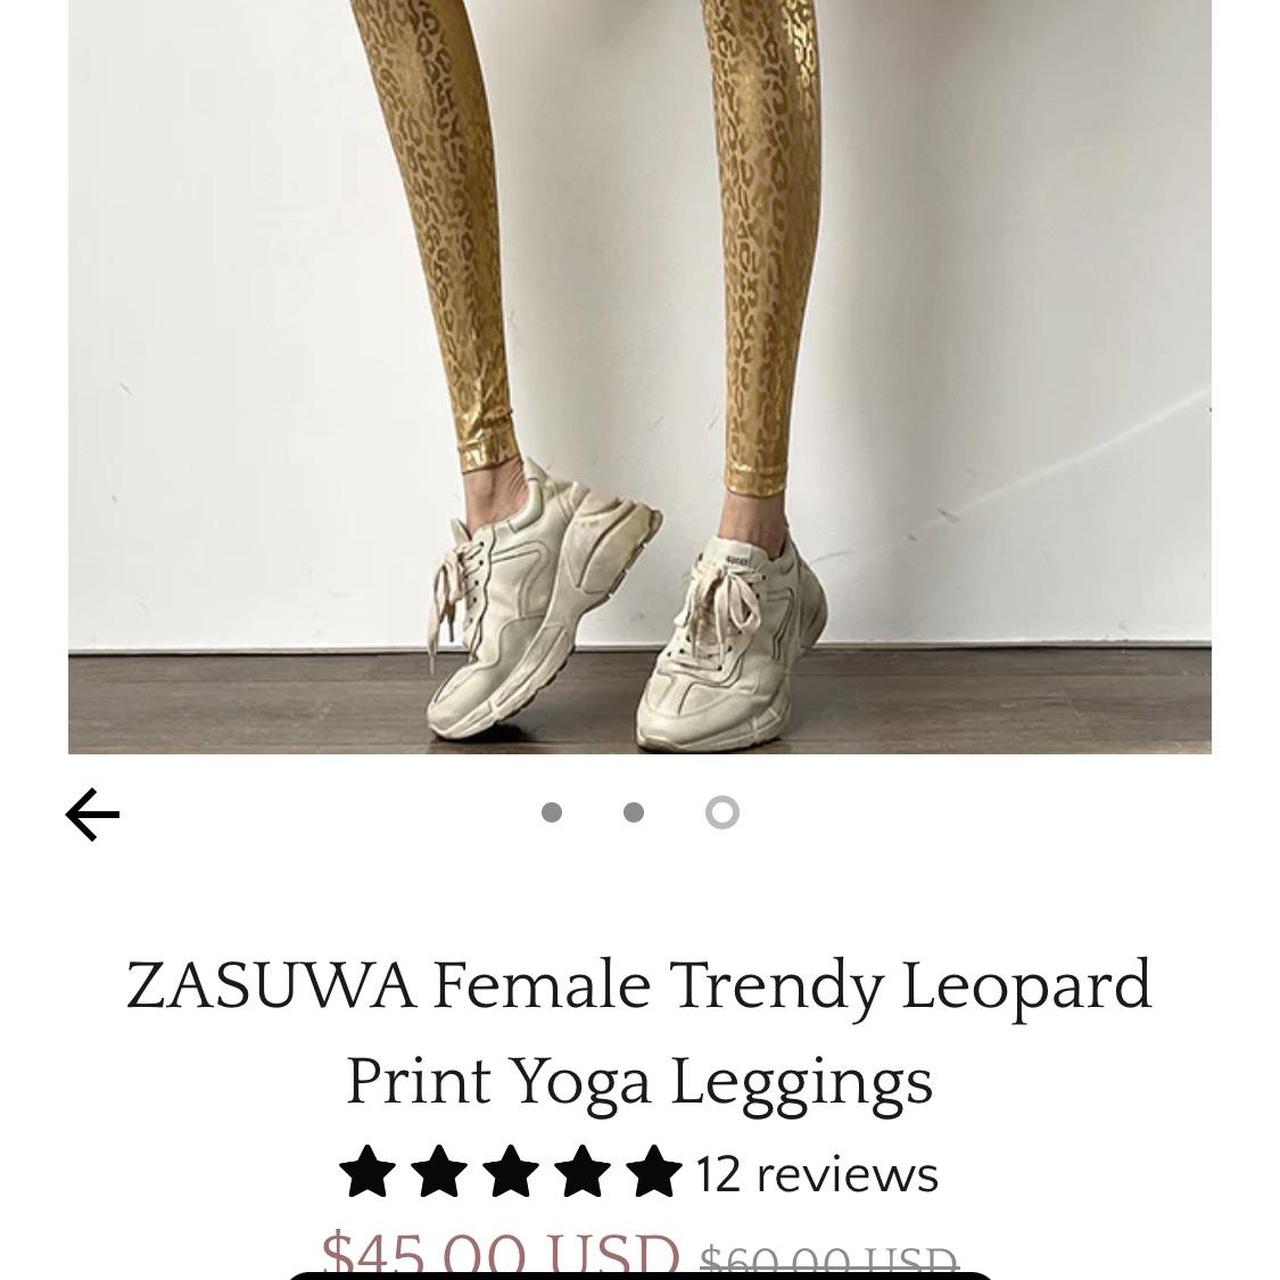 ZASUWA Female Trendy Leopard Print Yoga Leggings in GOLD.